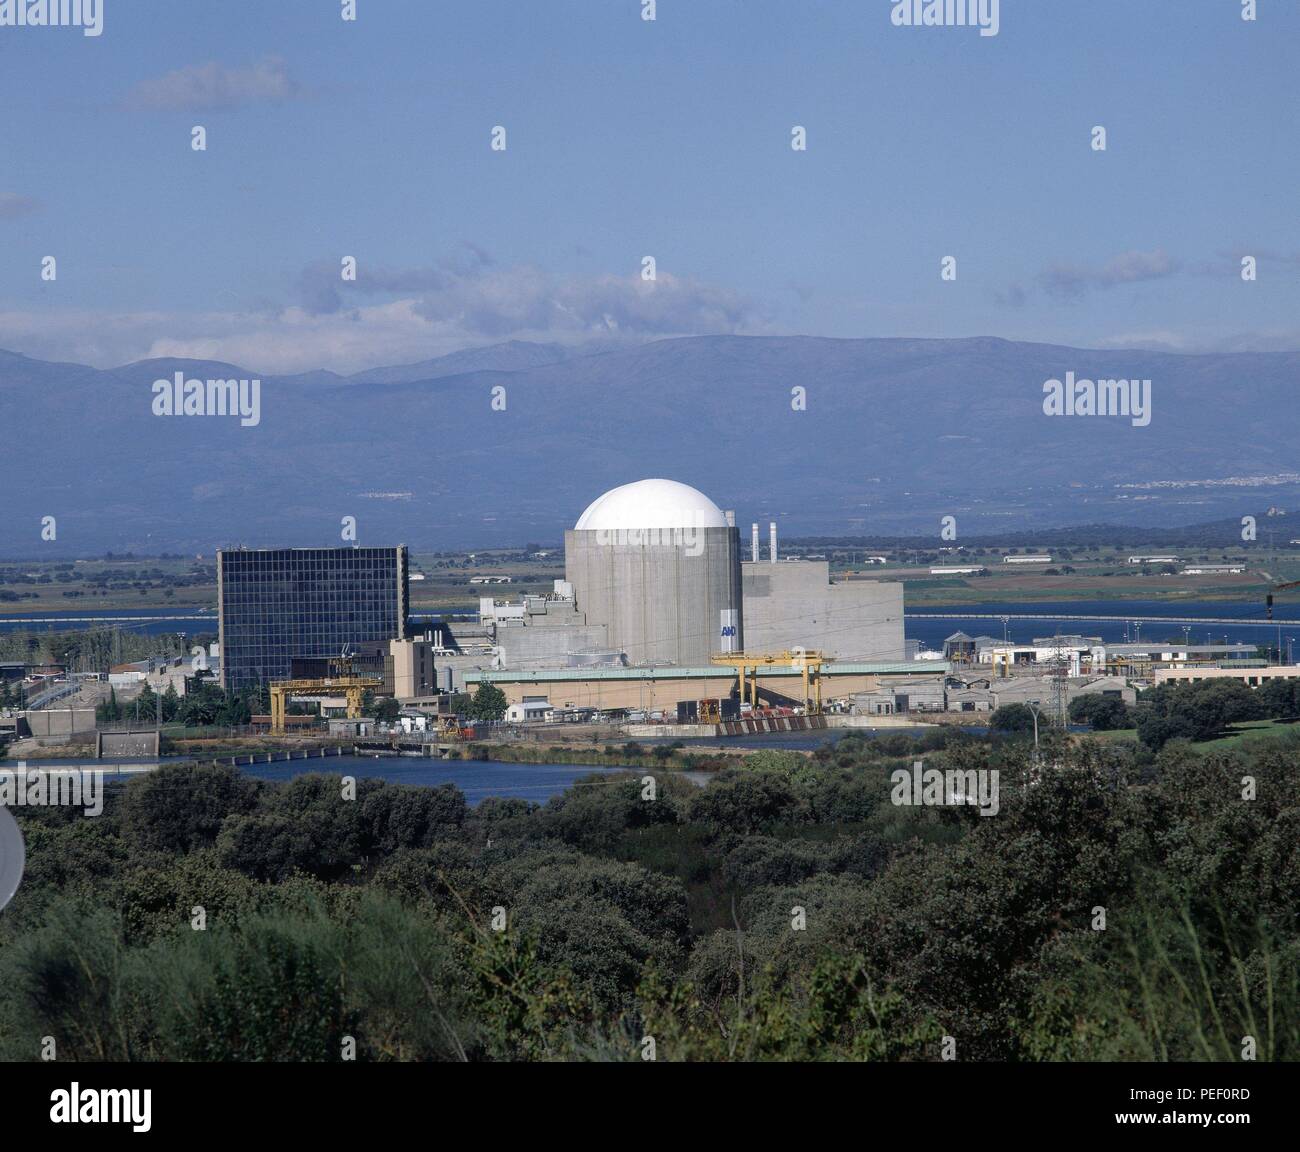 PANORAMICA DE LA CENTRAL NUCLEAR DE ALMARAZ. Location: CENTRAL NUCLEAR, ALMARÁZ, SPAIN. Stock Photo